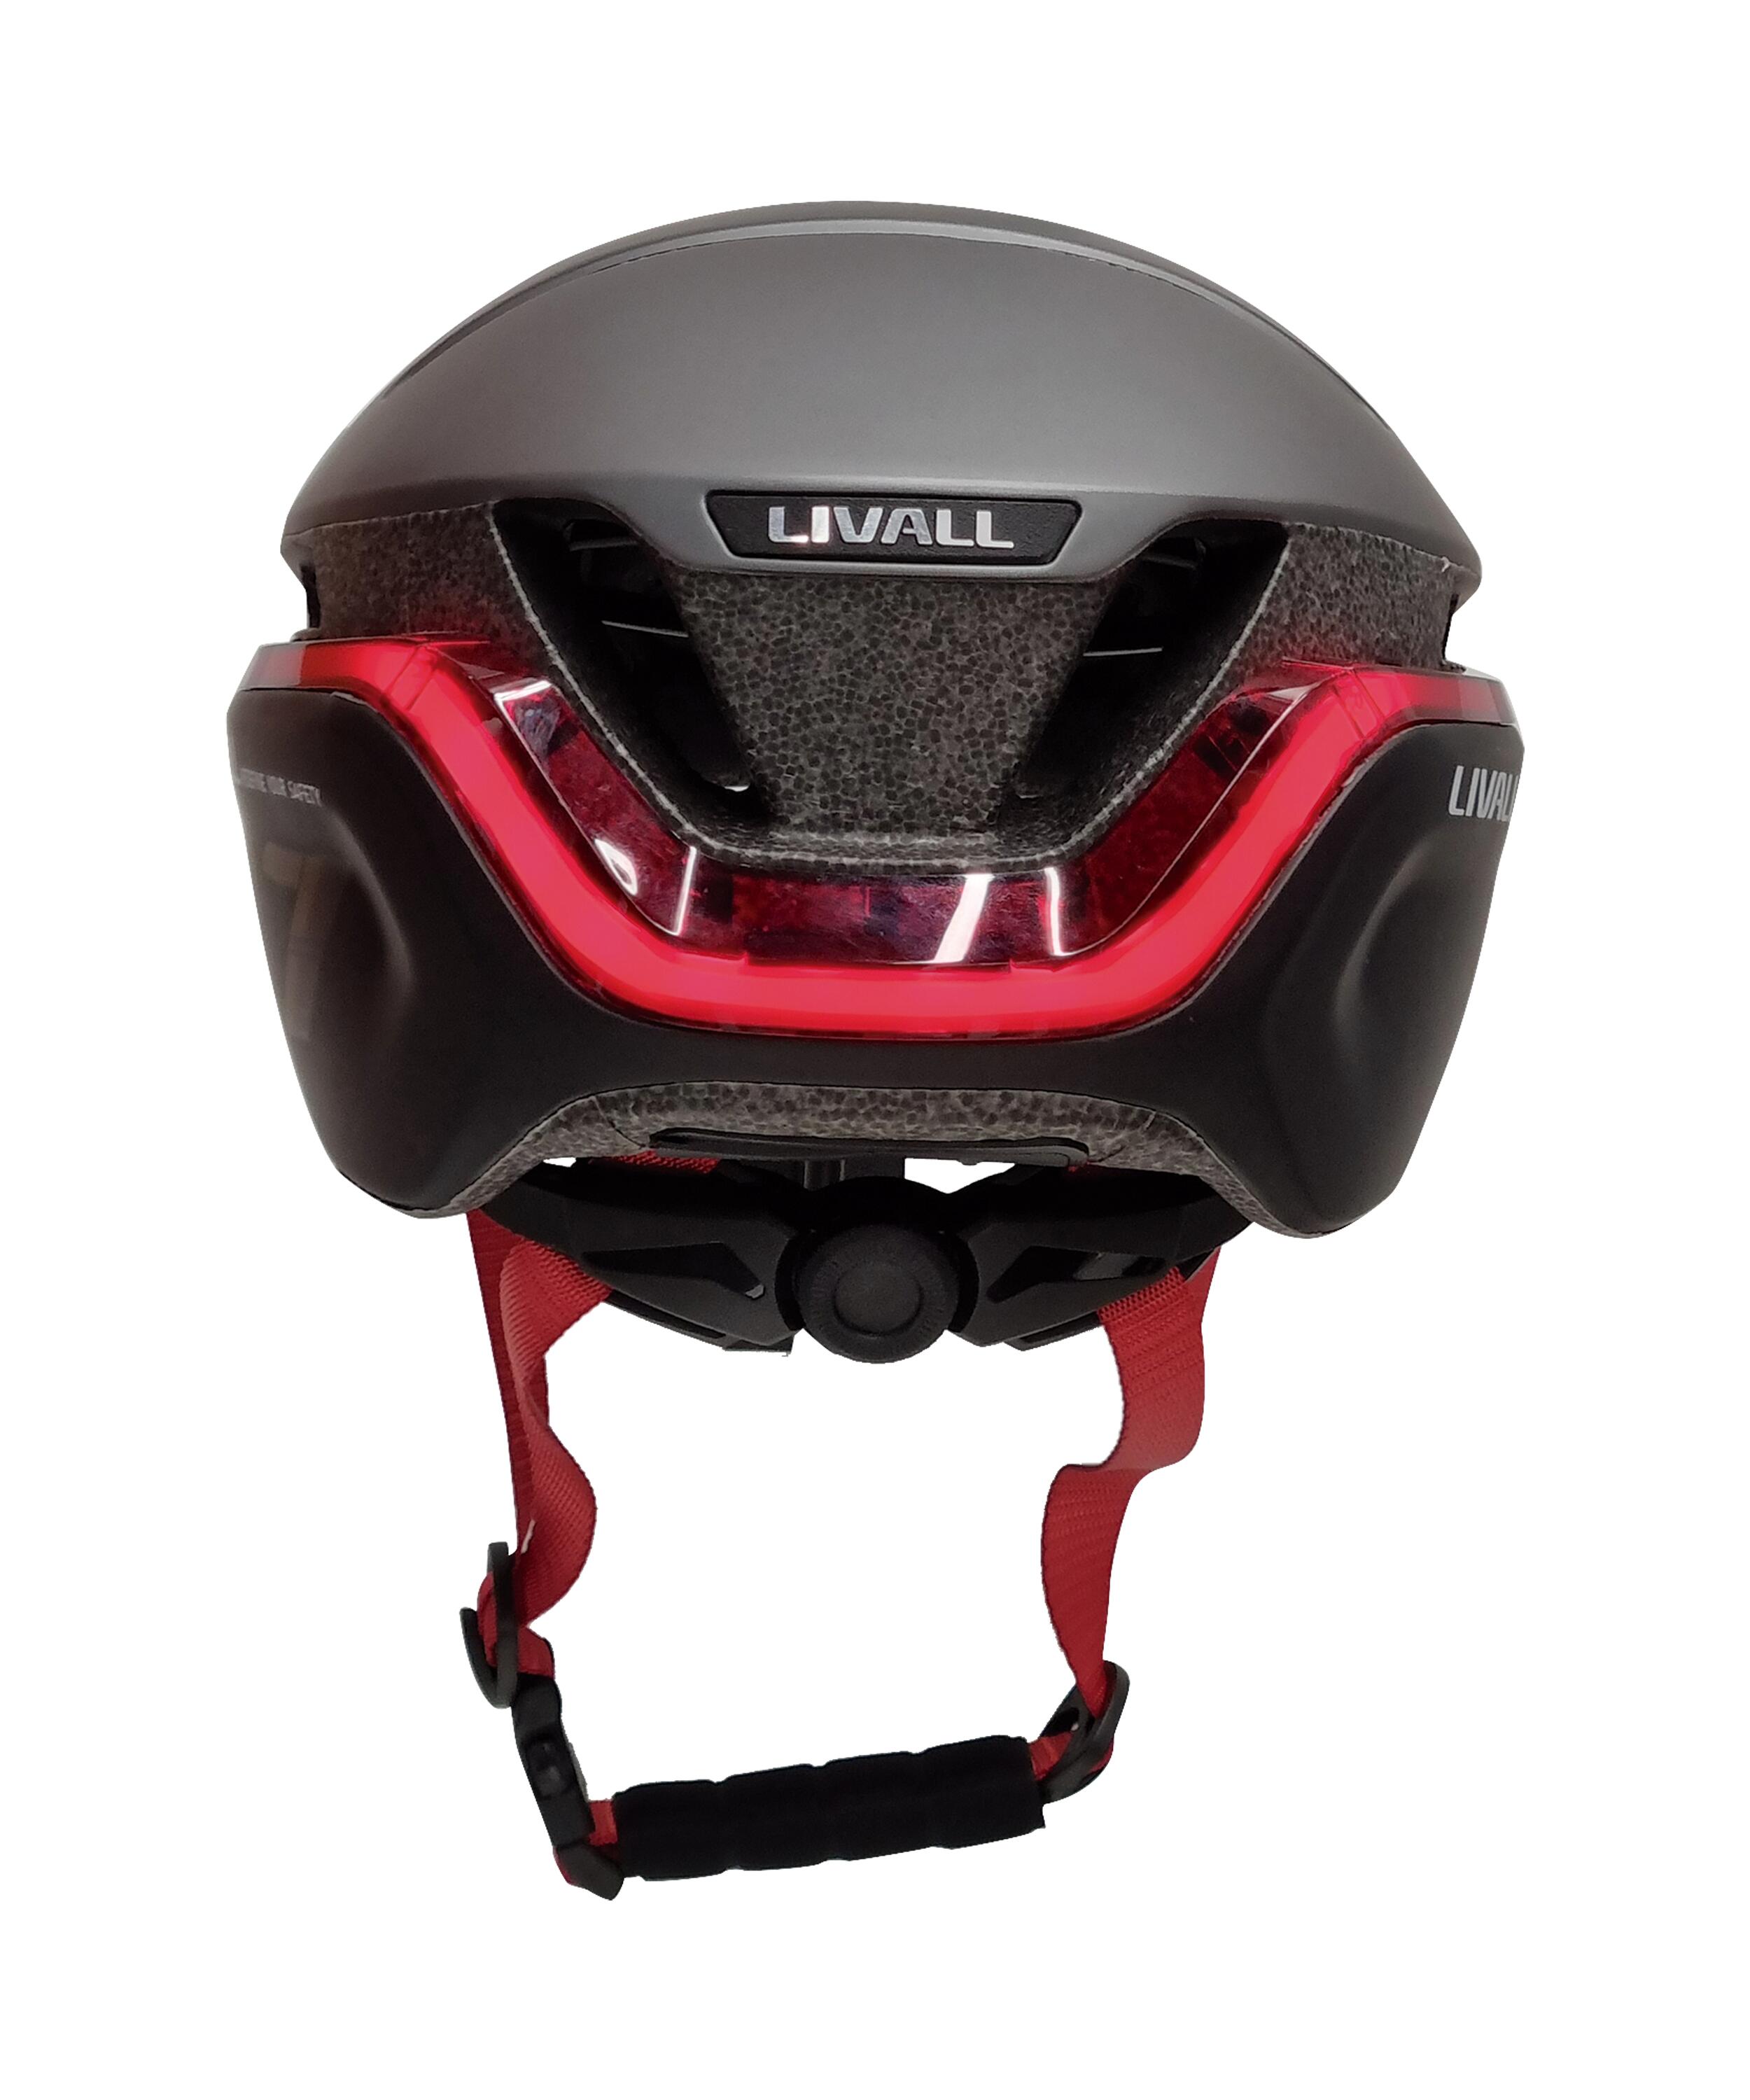 Livall EVO21 Smart Riding Helmet 2/7